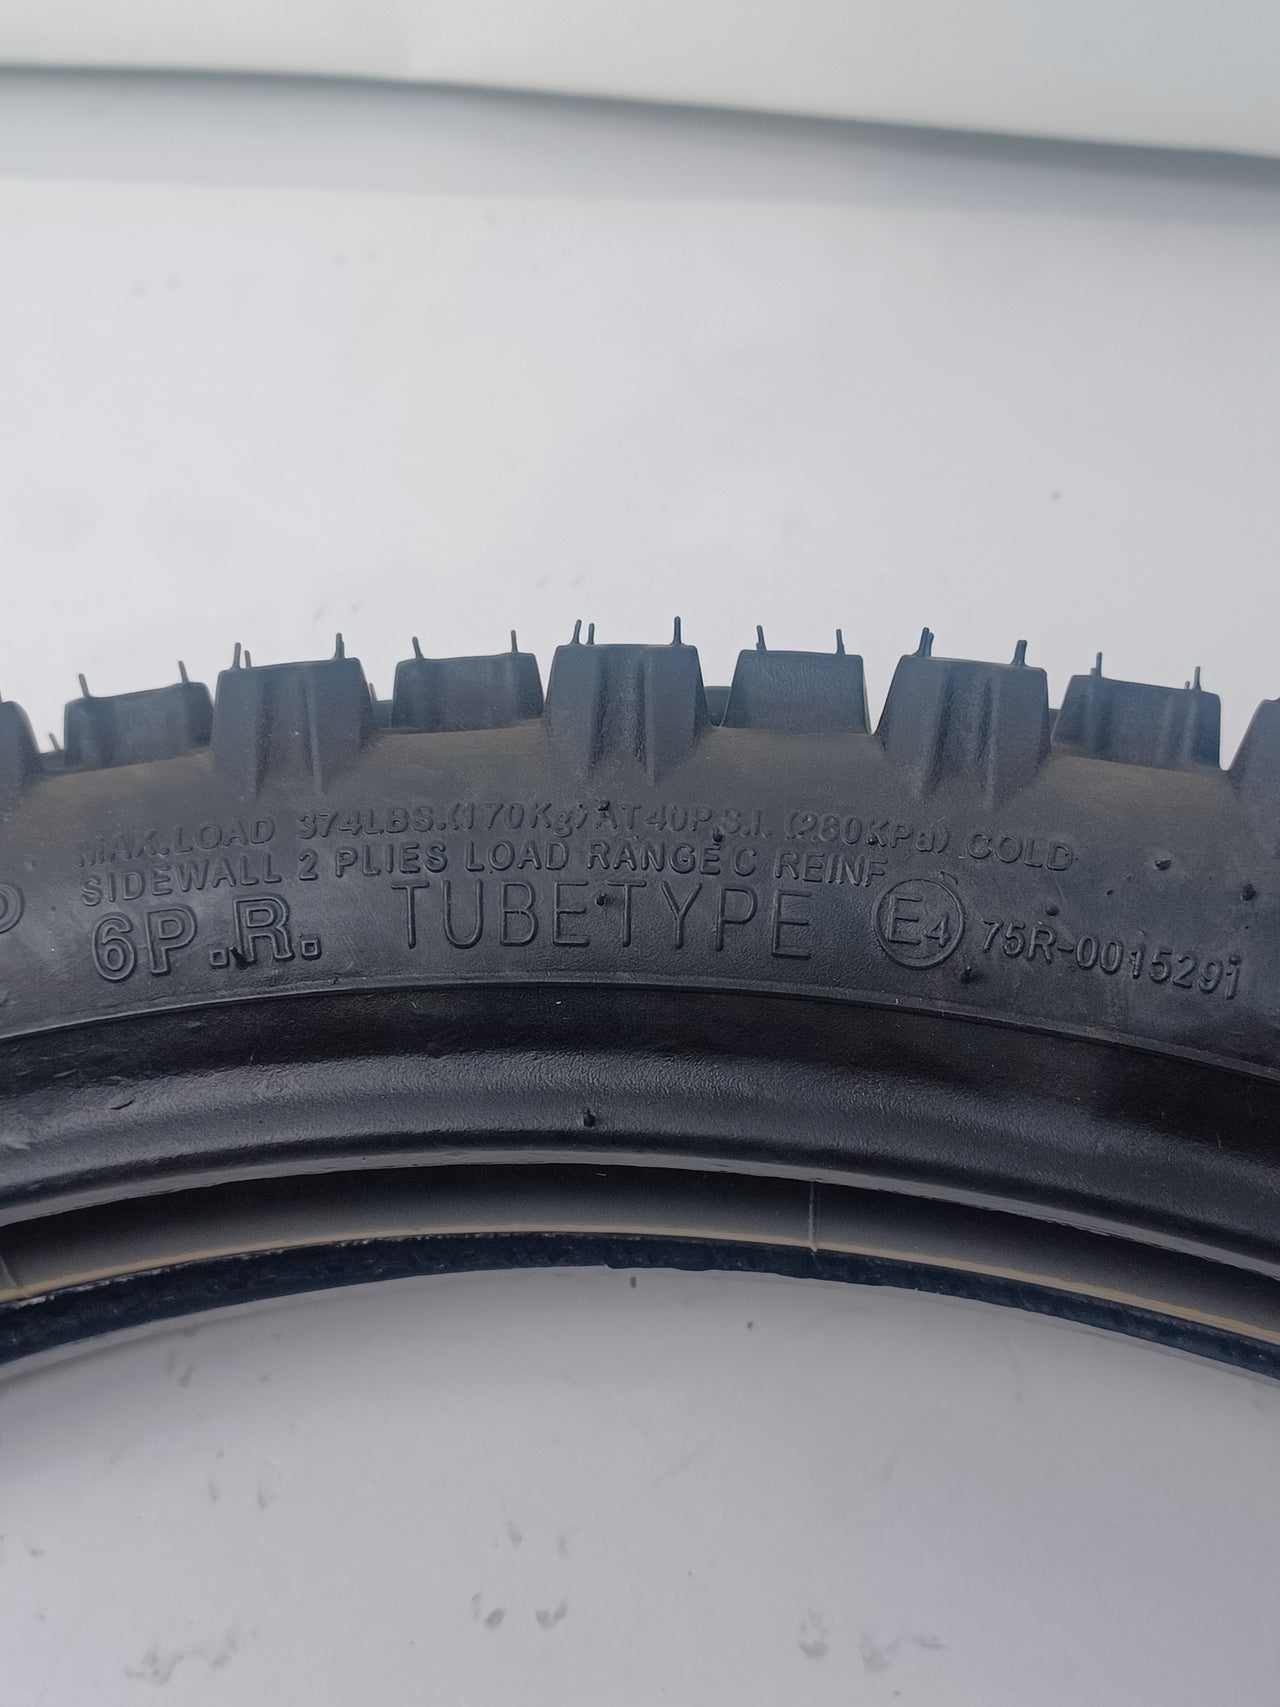 Venom Thunder 125cc Dirt Bike - Front Tire 307005025001